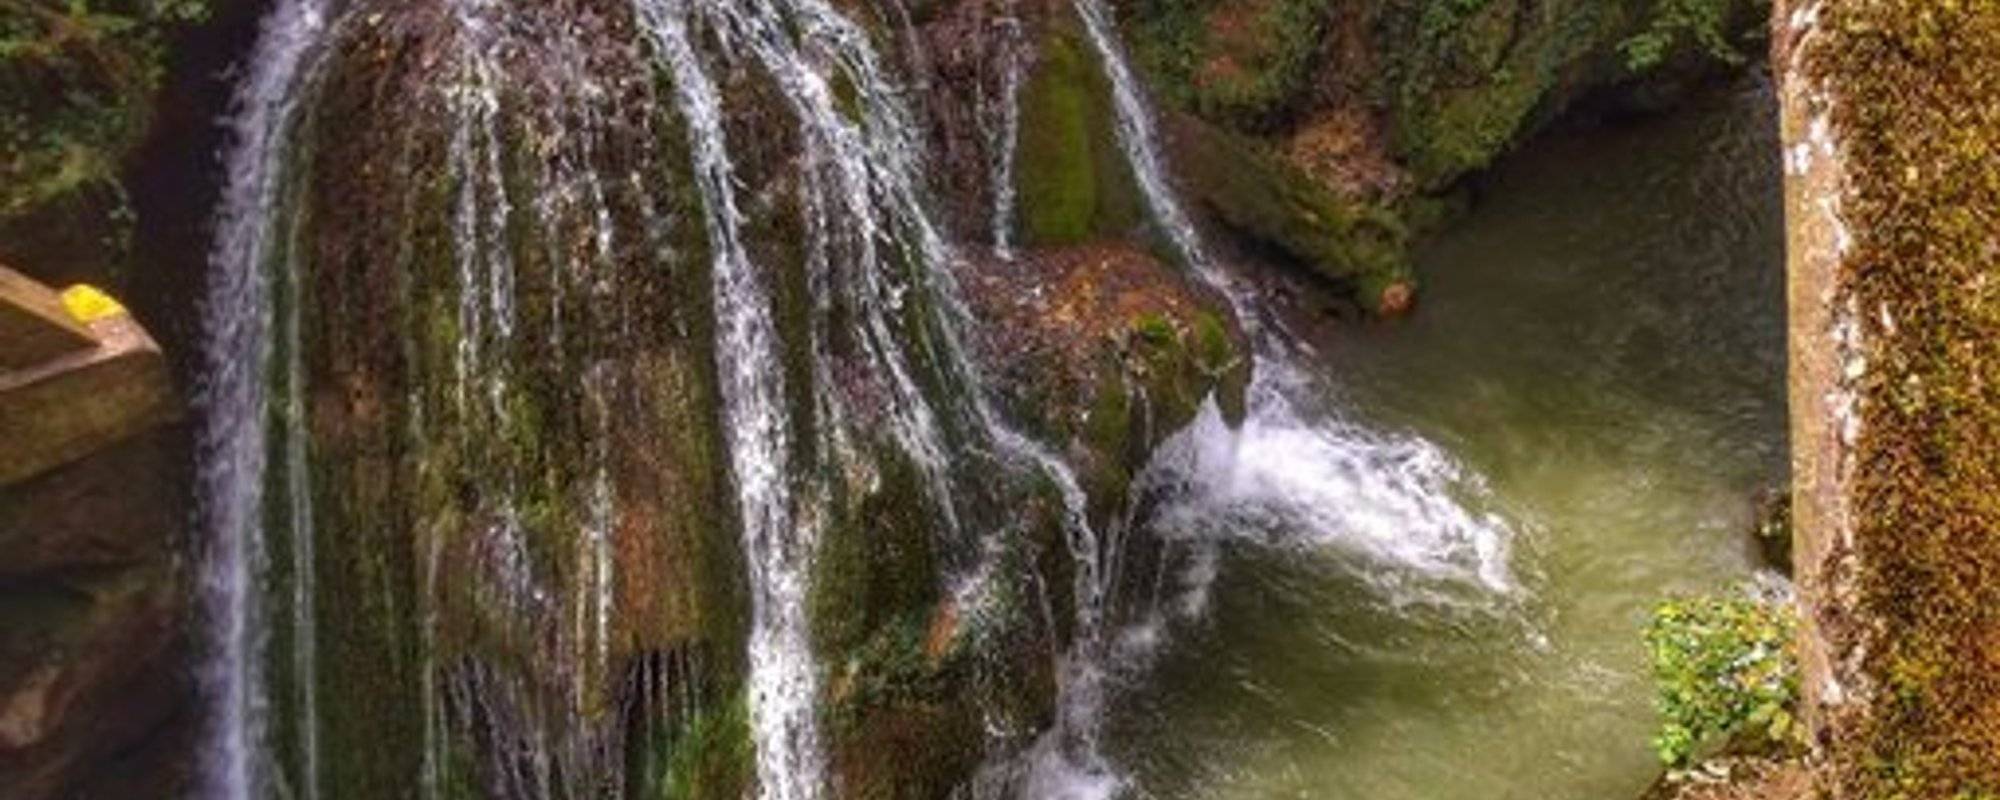 Let's travel together #54 - Bigar Waterfall (Cascada Bigar)